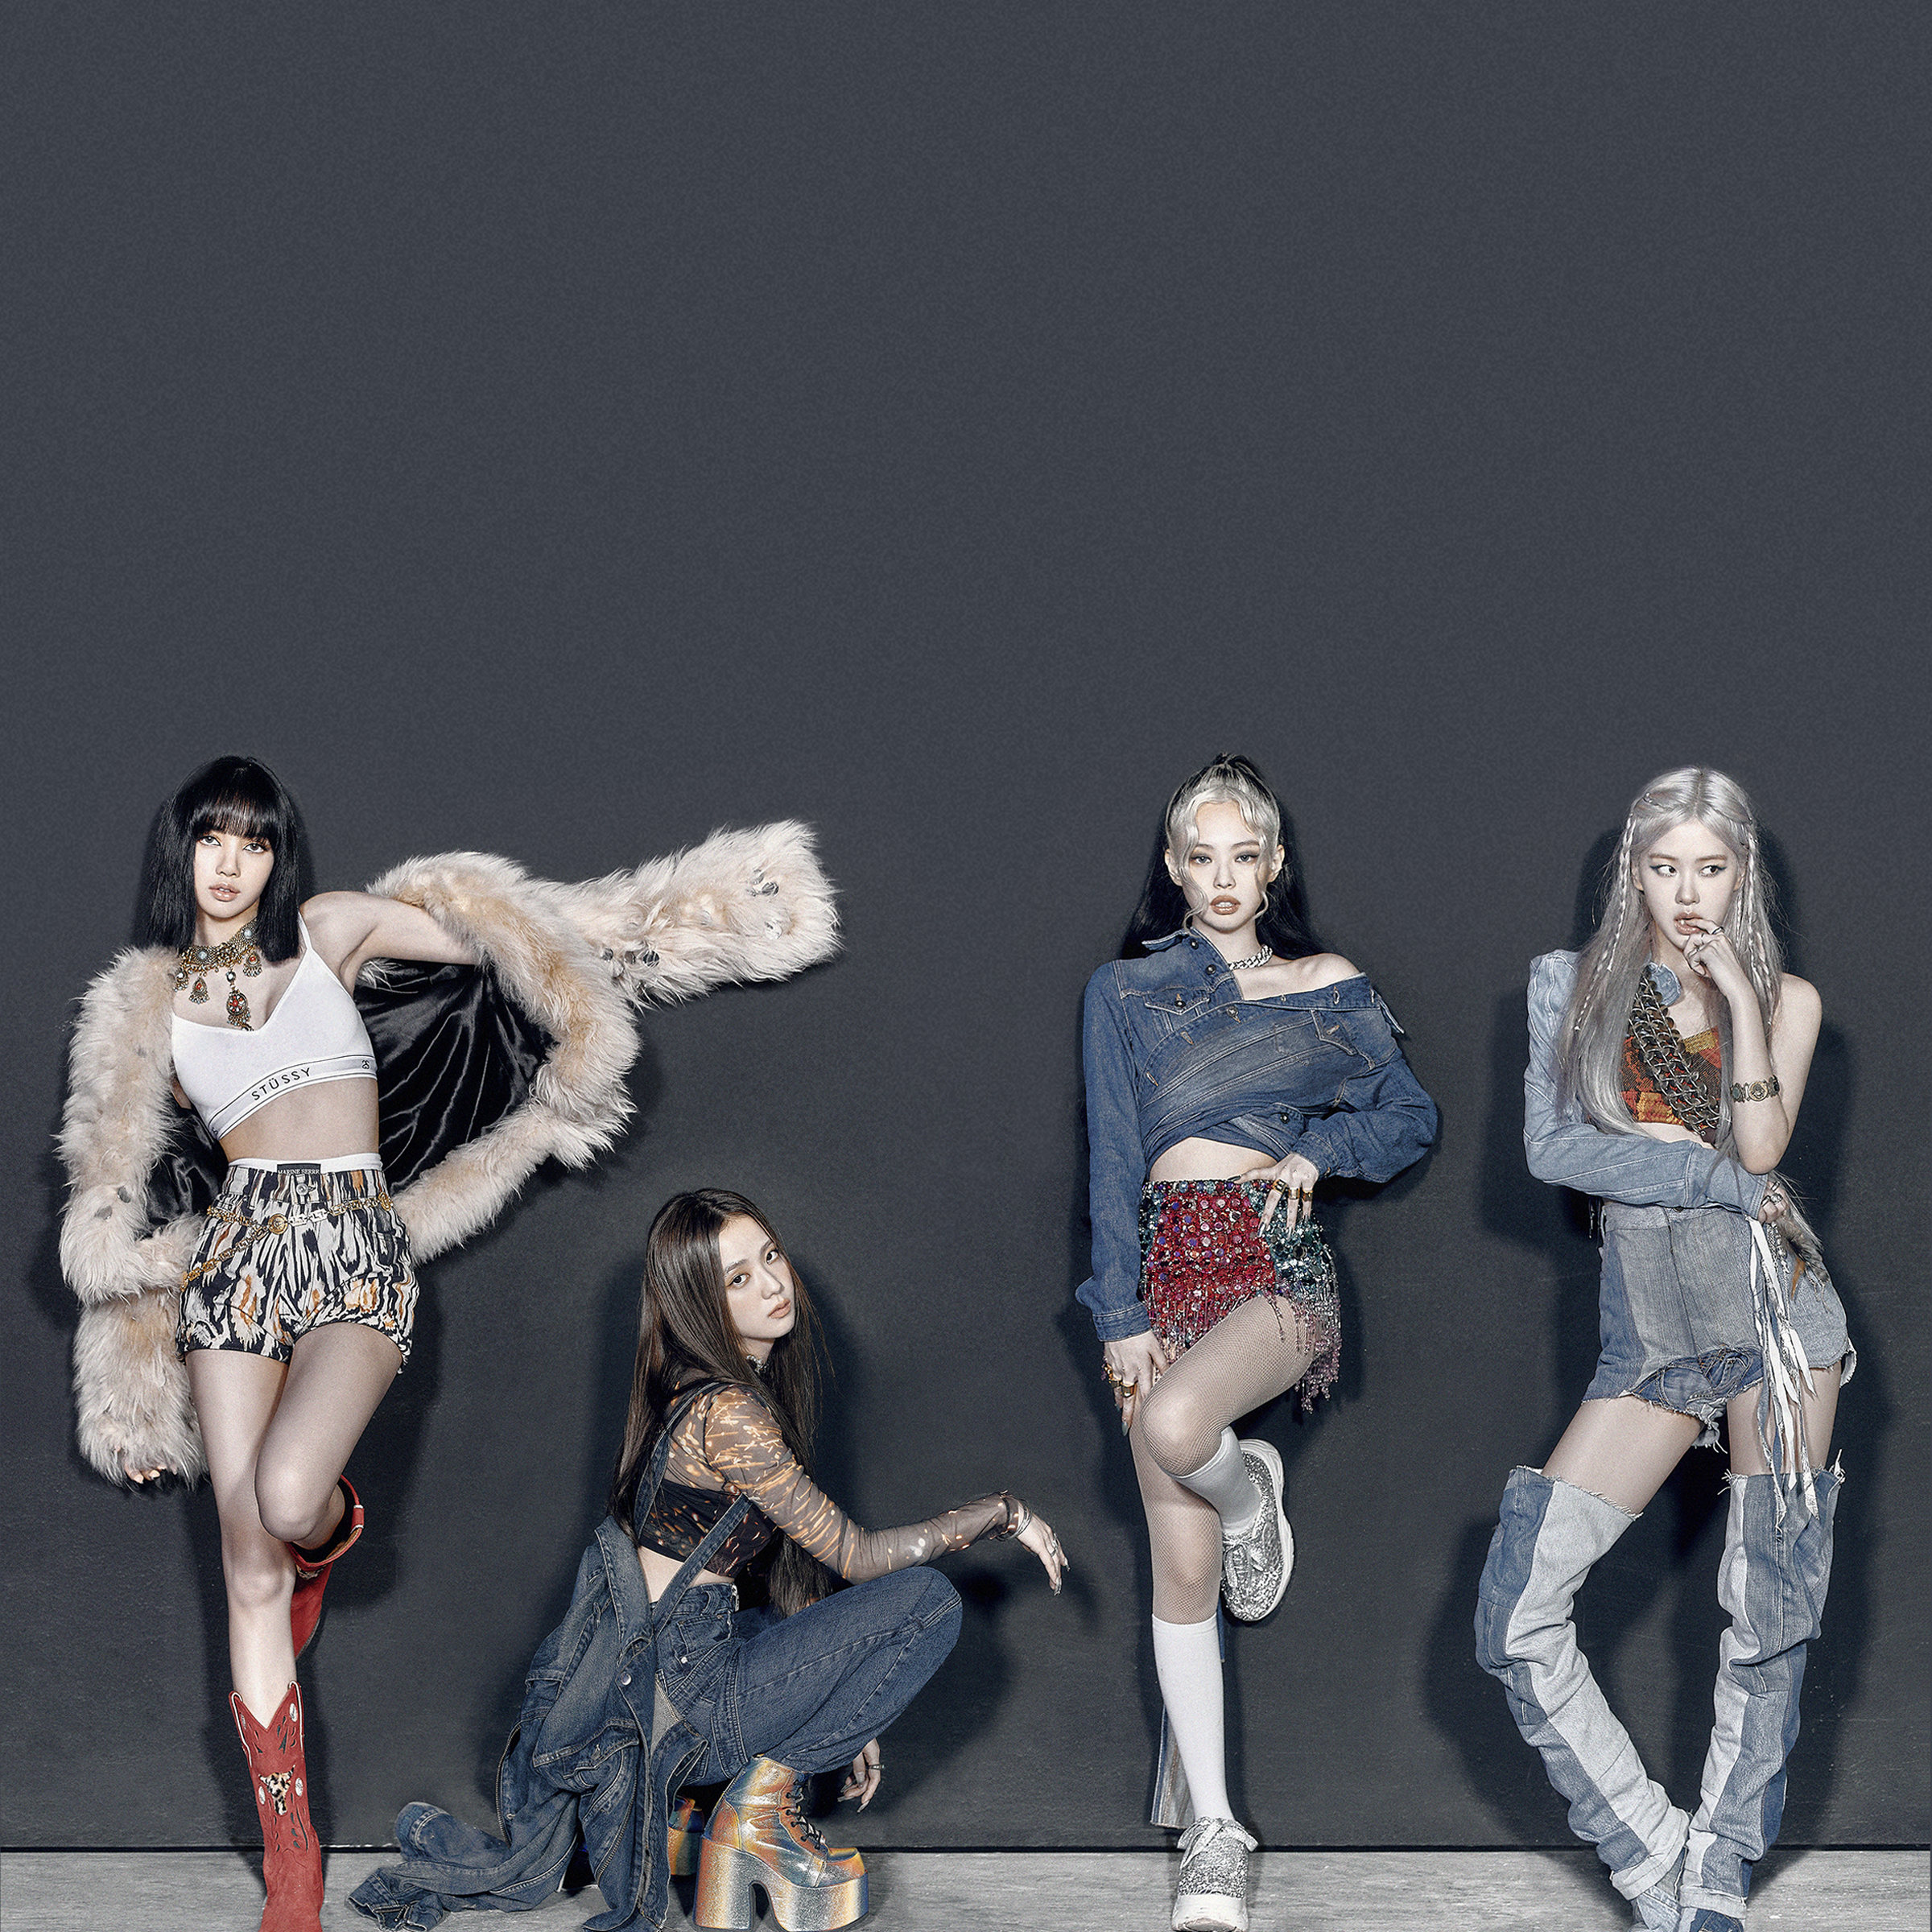 Blackpink Featured in New ELLE Korea Video for Louis Vuitton